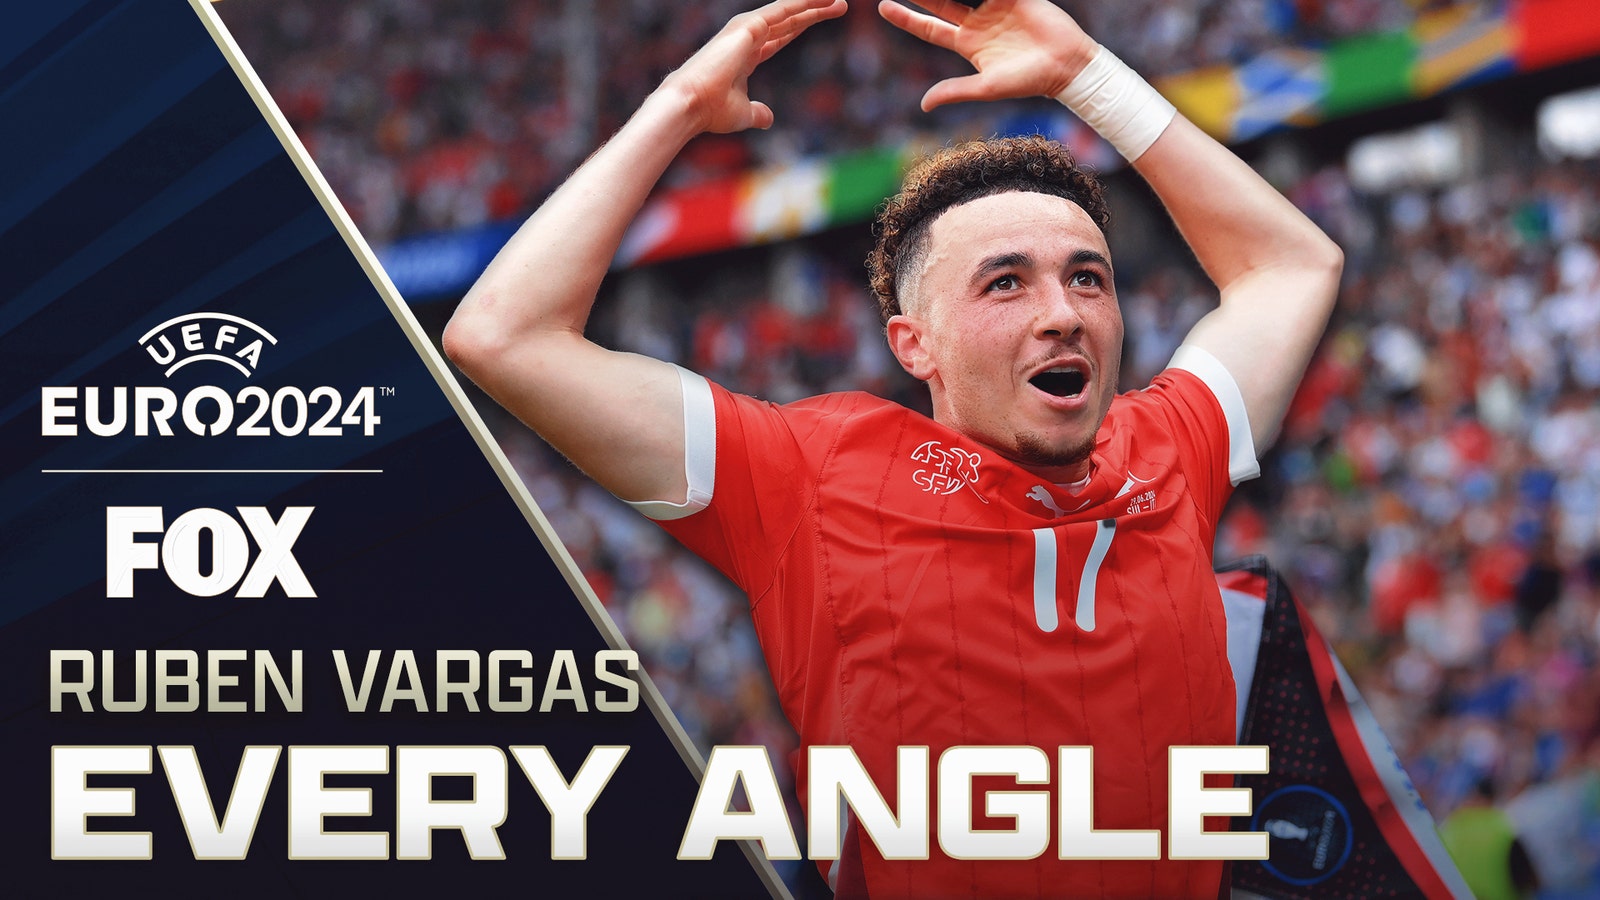 Switzerland's Ruben Vargas' QUICK goal vs. Italy | Every Angle